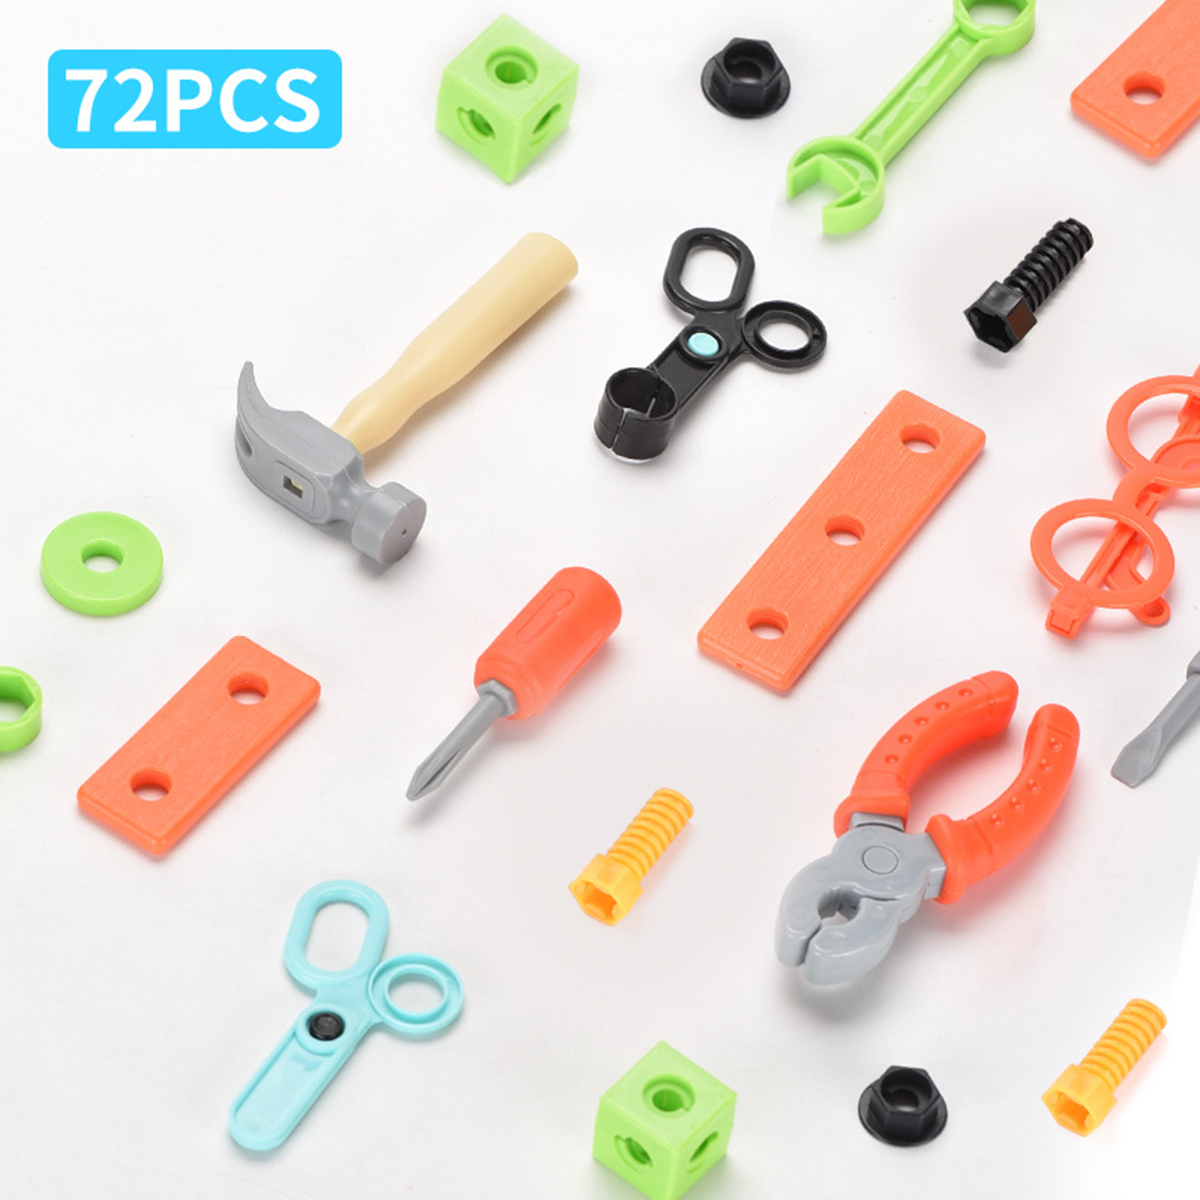 1372Pcs-3D-Puzzle-DIY-Asassembly-Screwing-Blocks-Repair-Tool-Kit-Educational-Toy-for-Kids-Gift-1735098-6